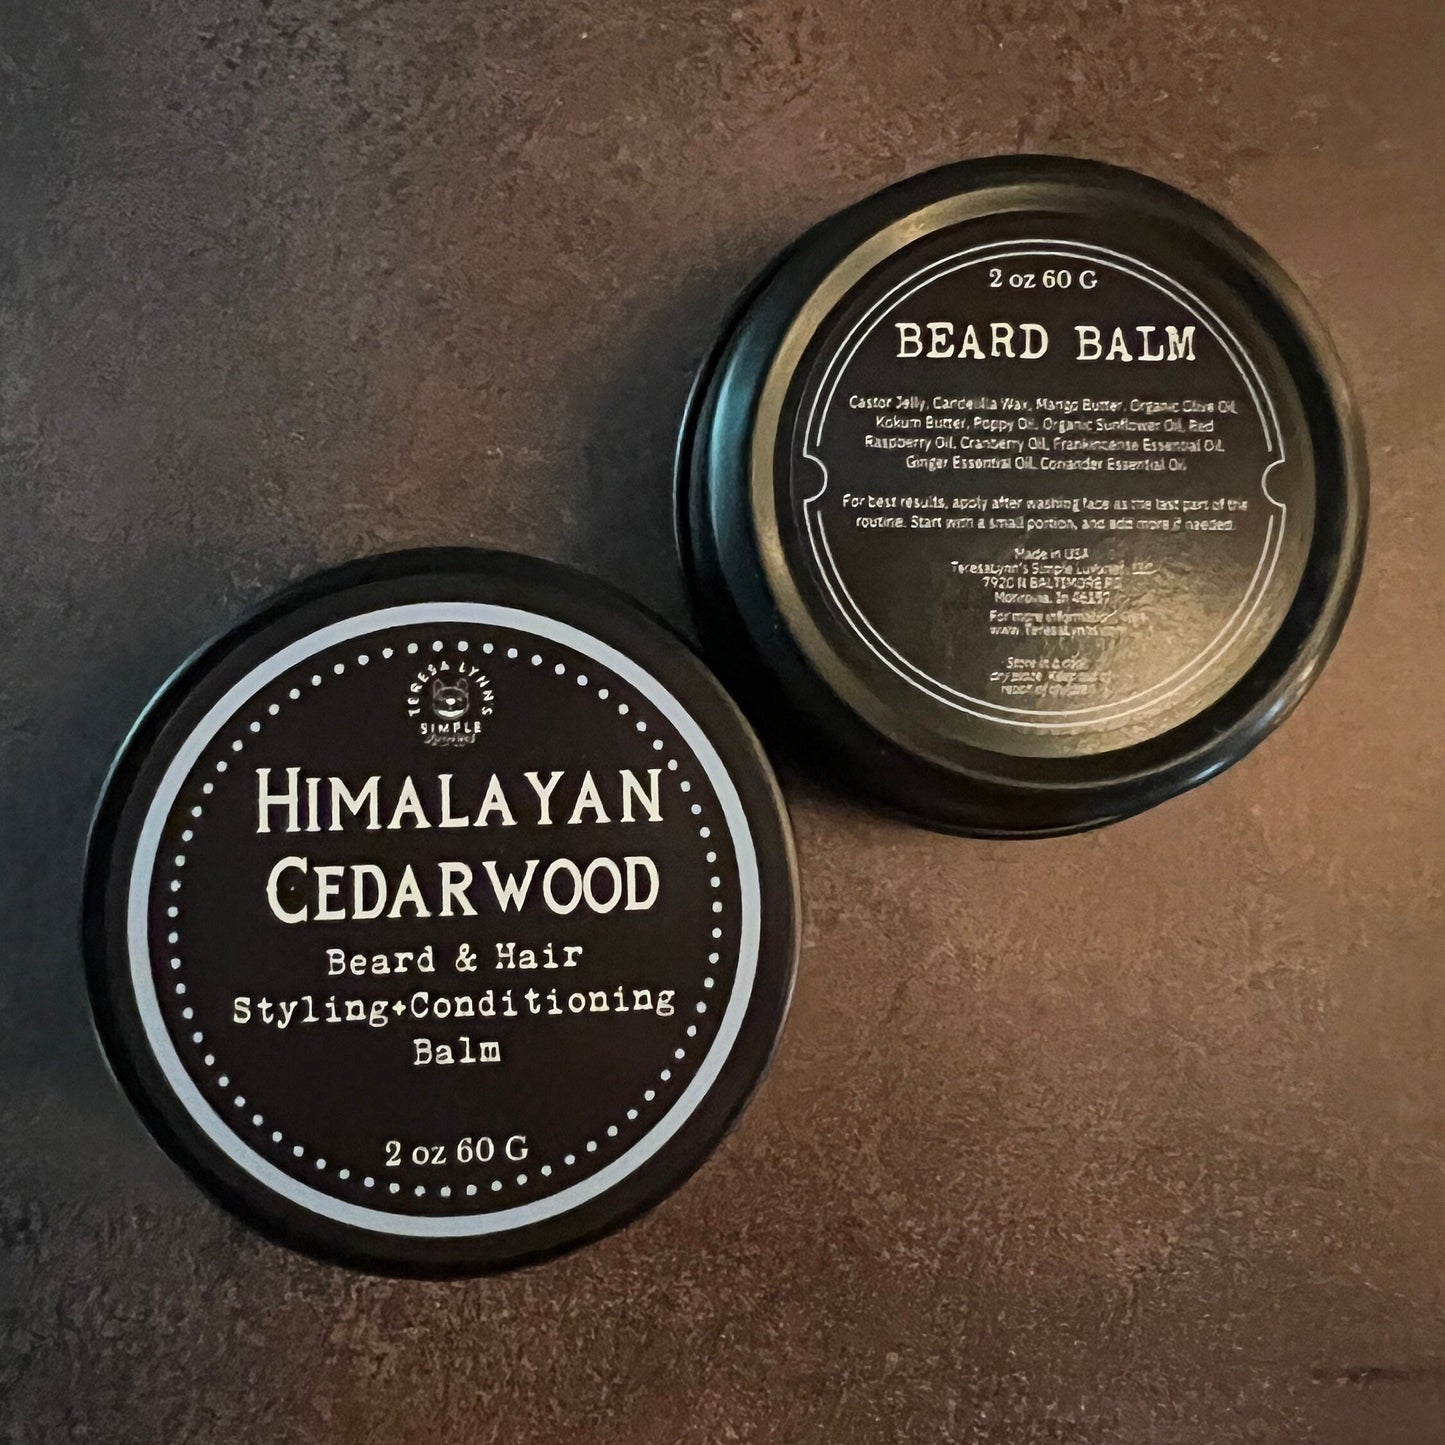 Beard and Hair Styling and Conditioning Balm, Himalayan Cedarwood